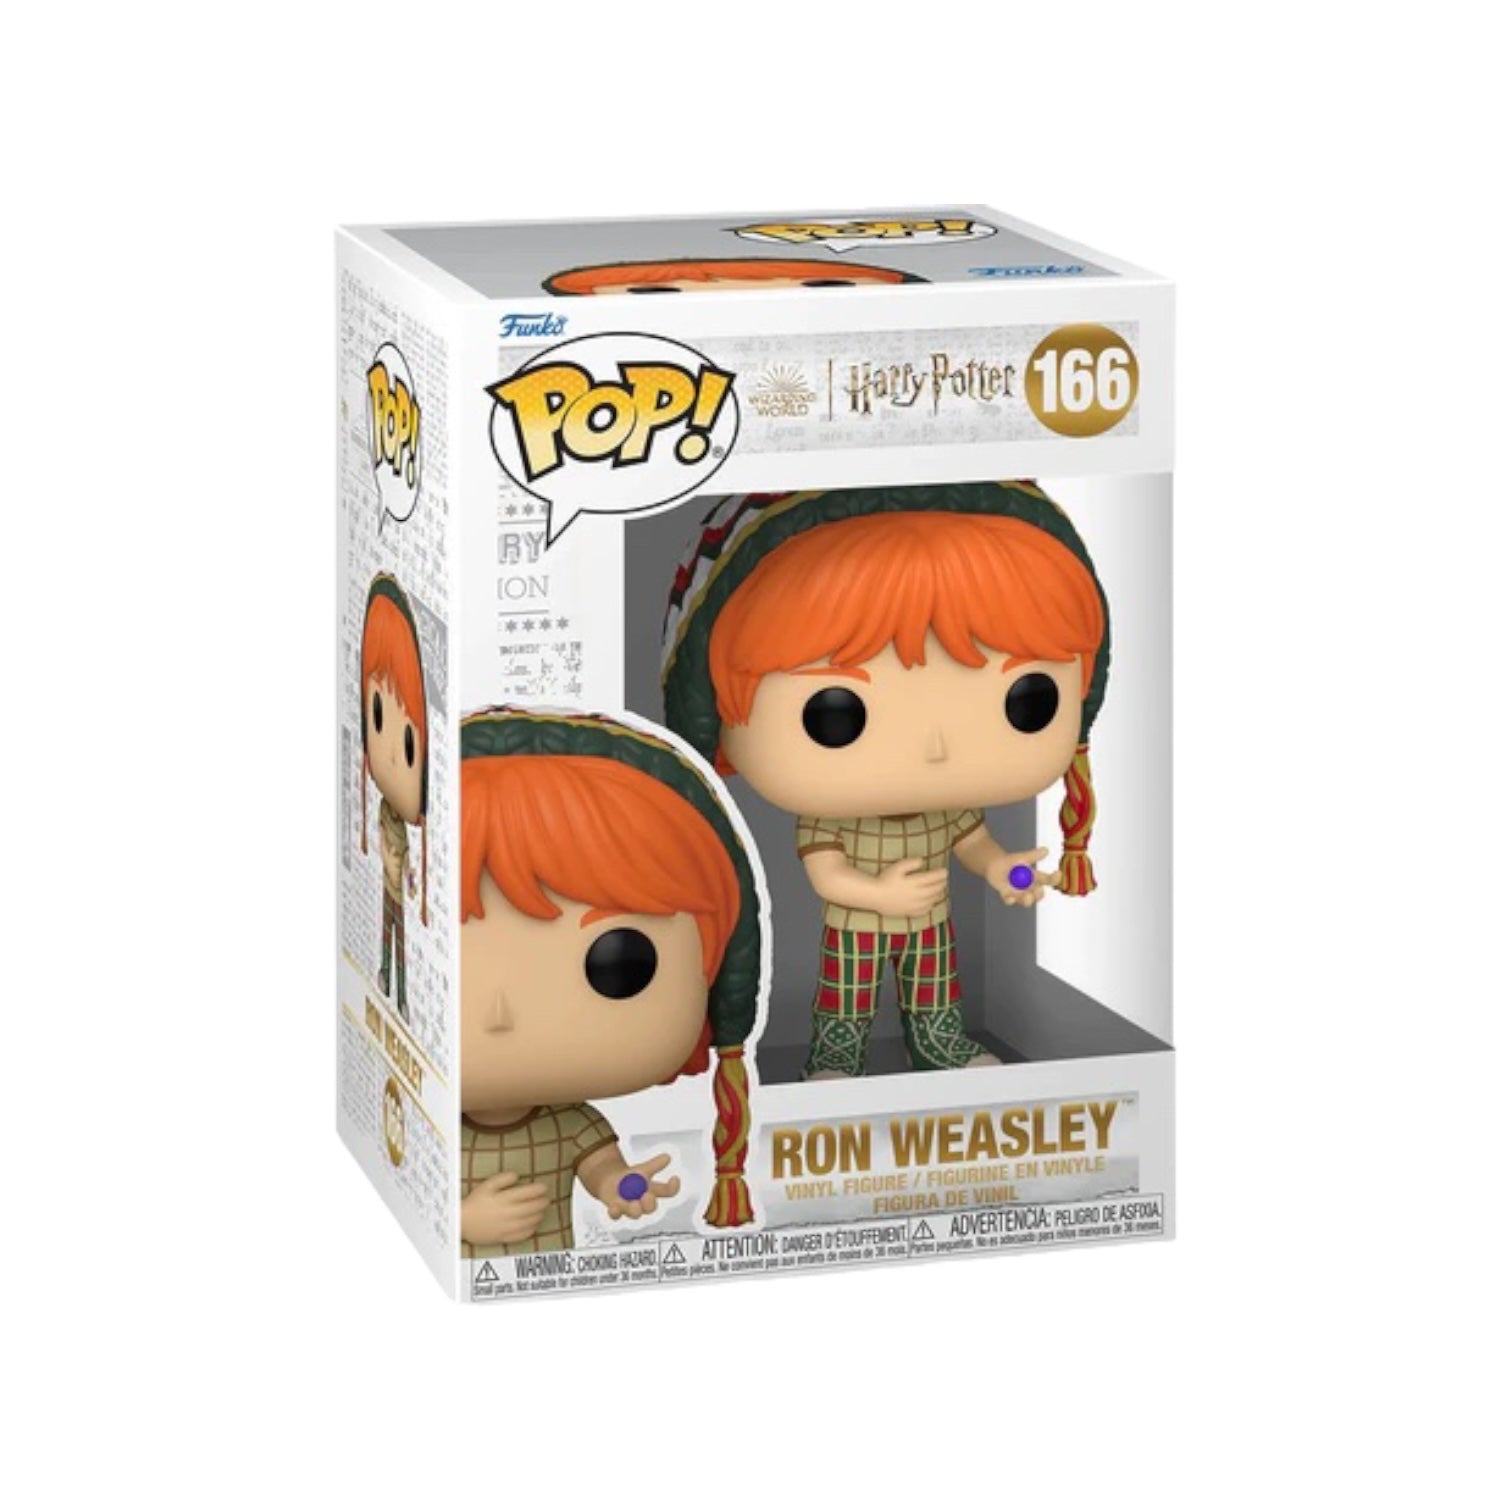 Ron Weasley #166 Funko Pop! Harry Potter - PREORDER